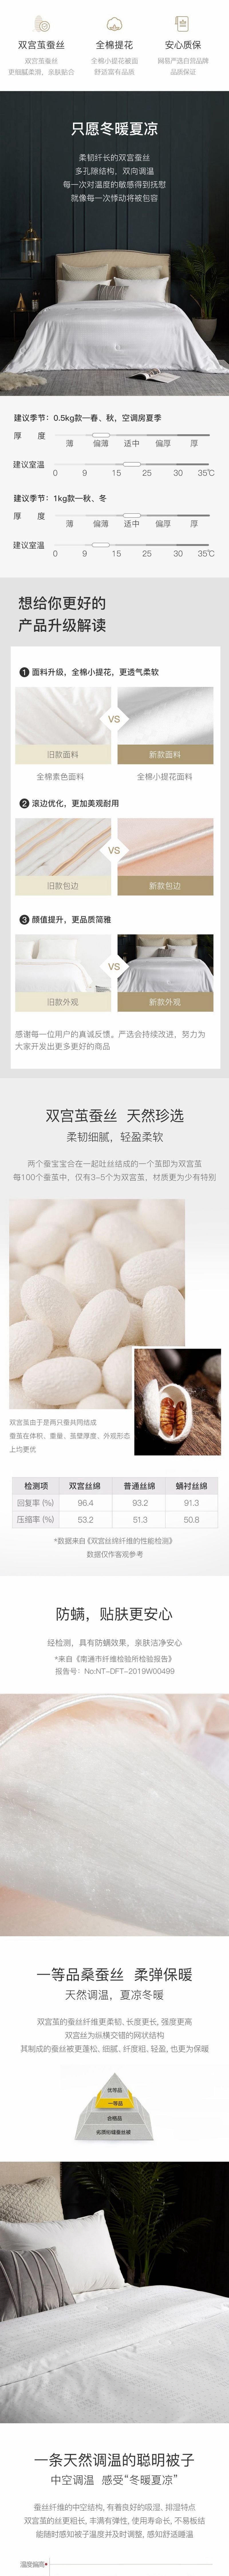 Mulberry Silk Comforter Anti-mite  220*240cm 1kg White [5-7 Days U.S. Shipping]